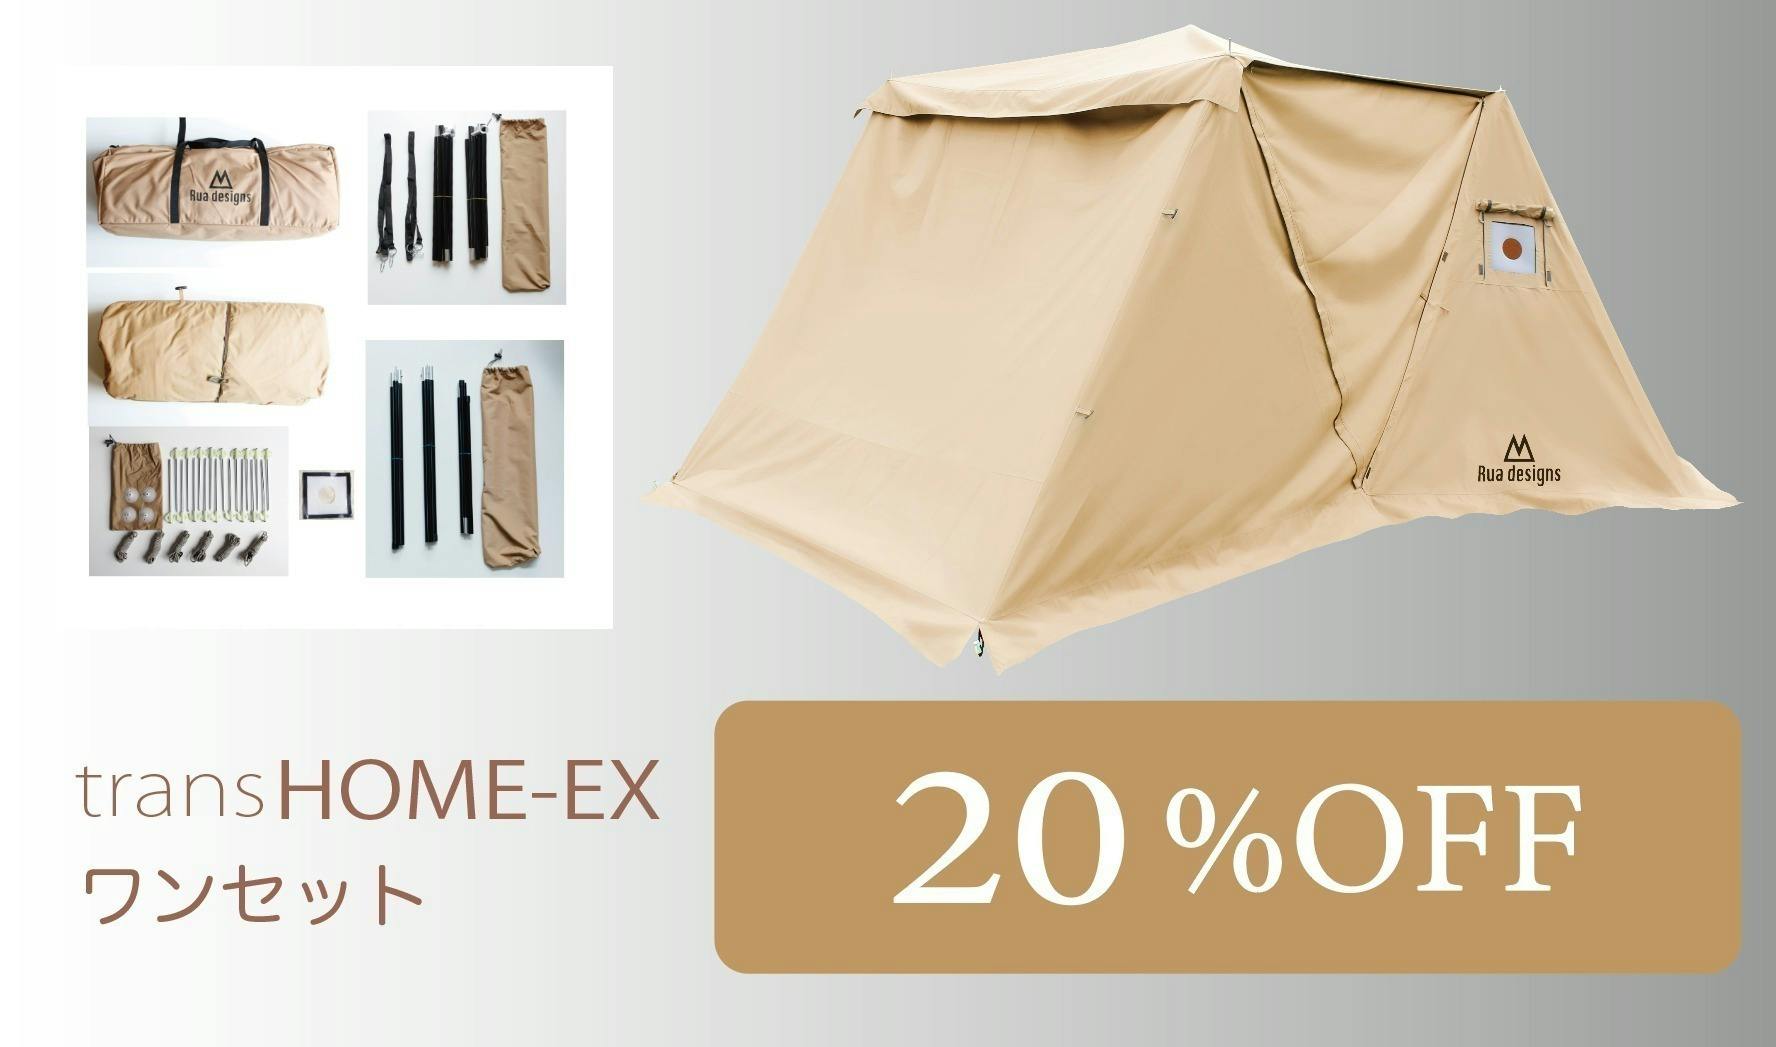 transHOME-EX メッシュインナーテントほかセット品１式付属 - テント